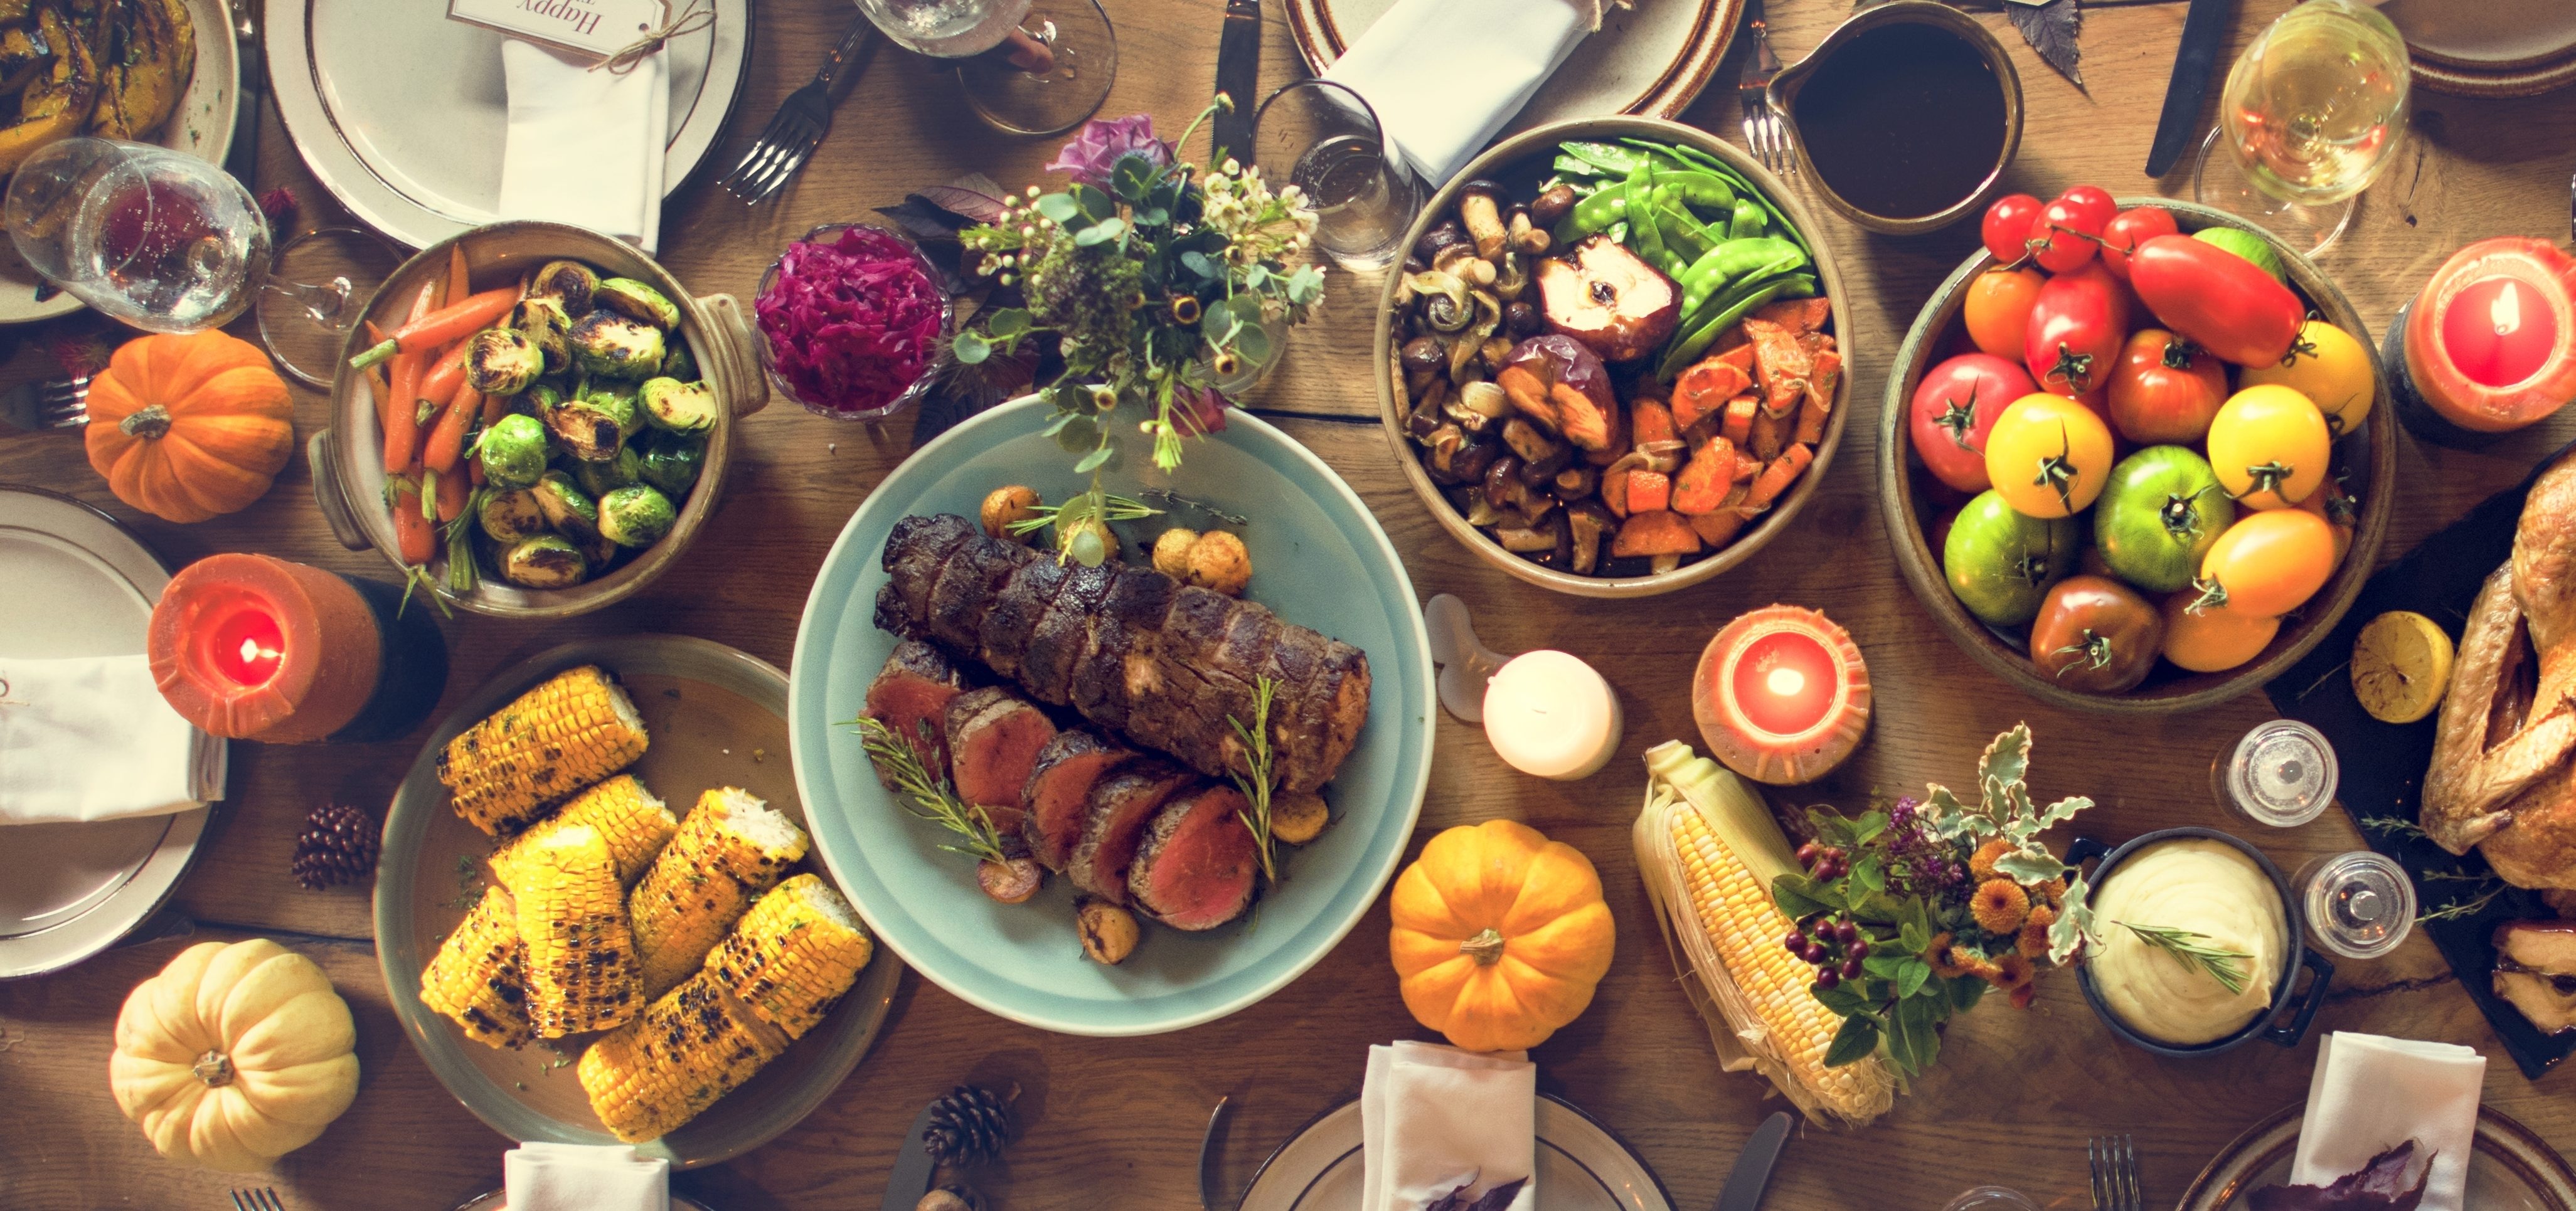 Thanksgiving Celebration Traditional Dinner Setting Food Concept (Shutterstock 678491803)